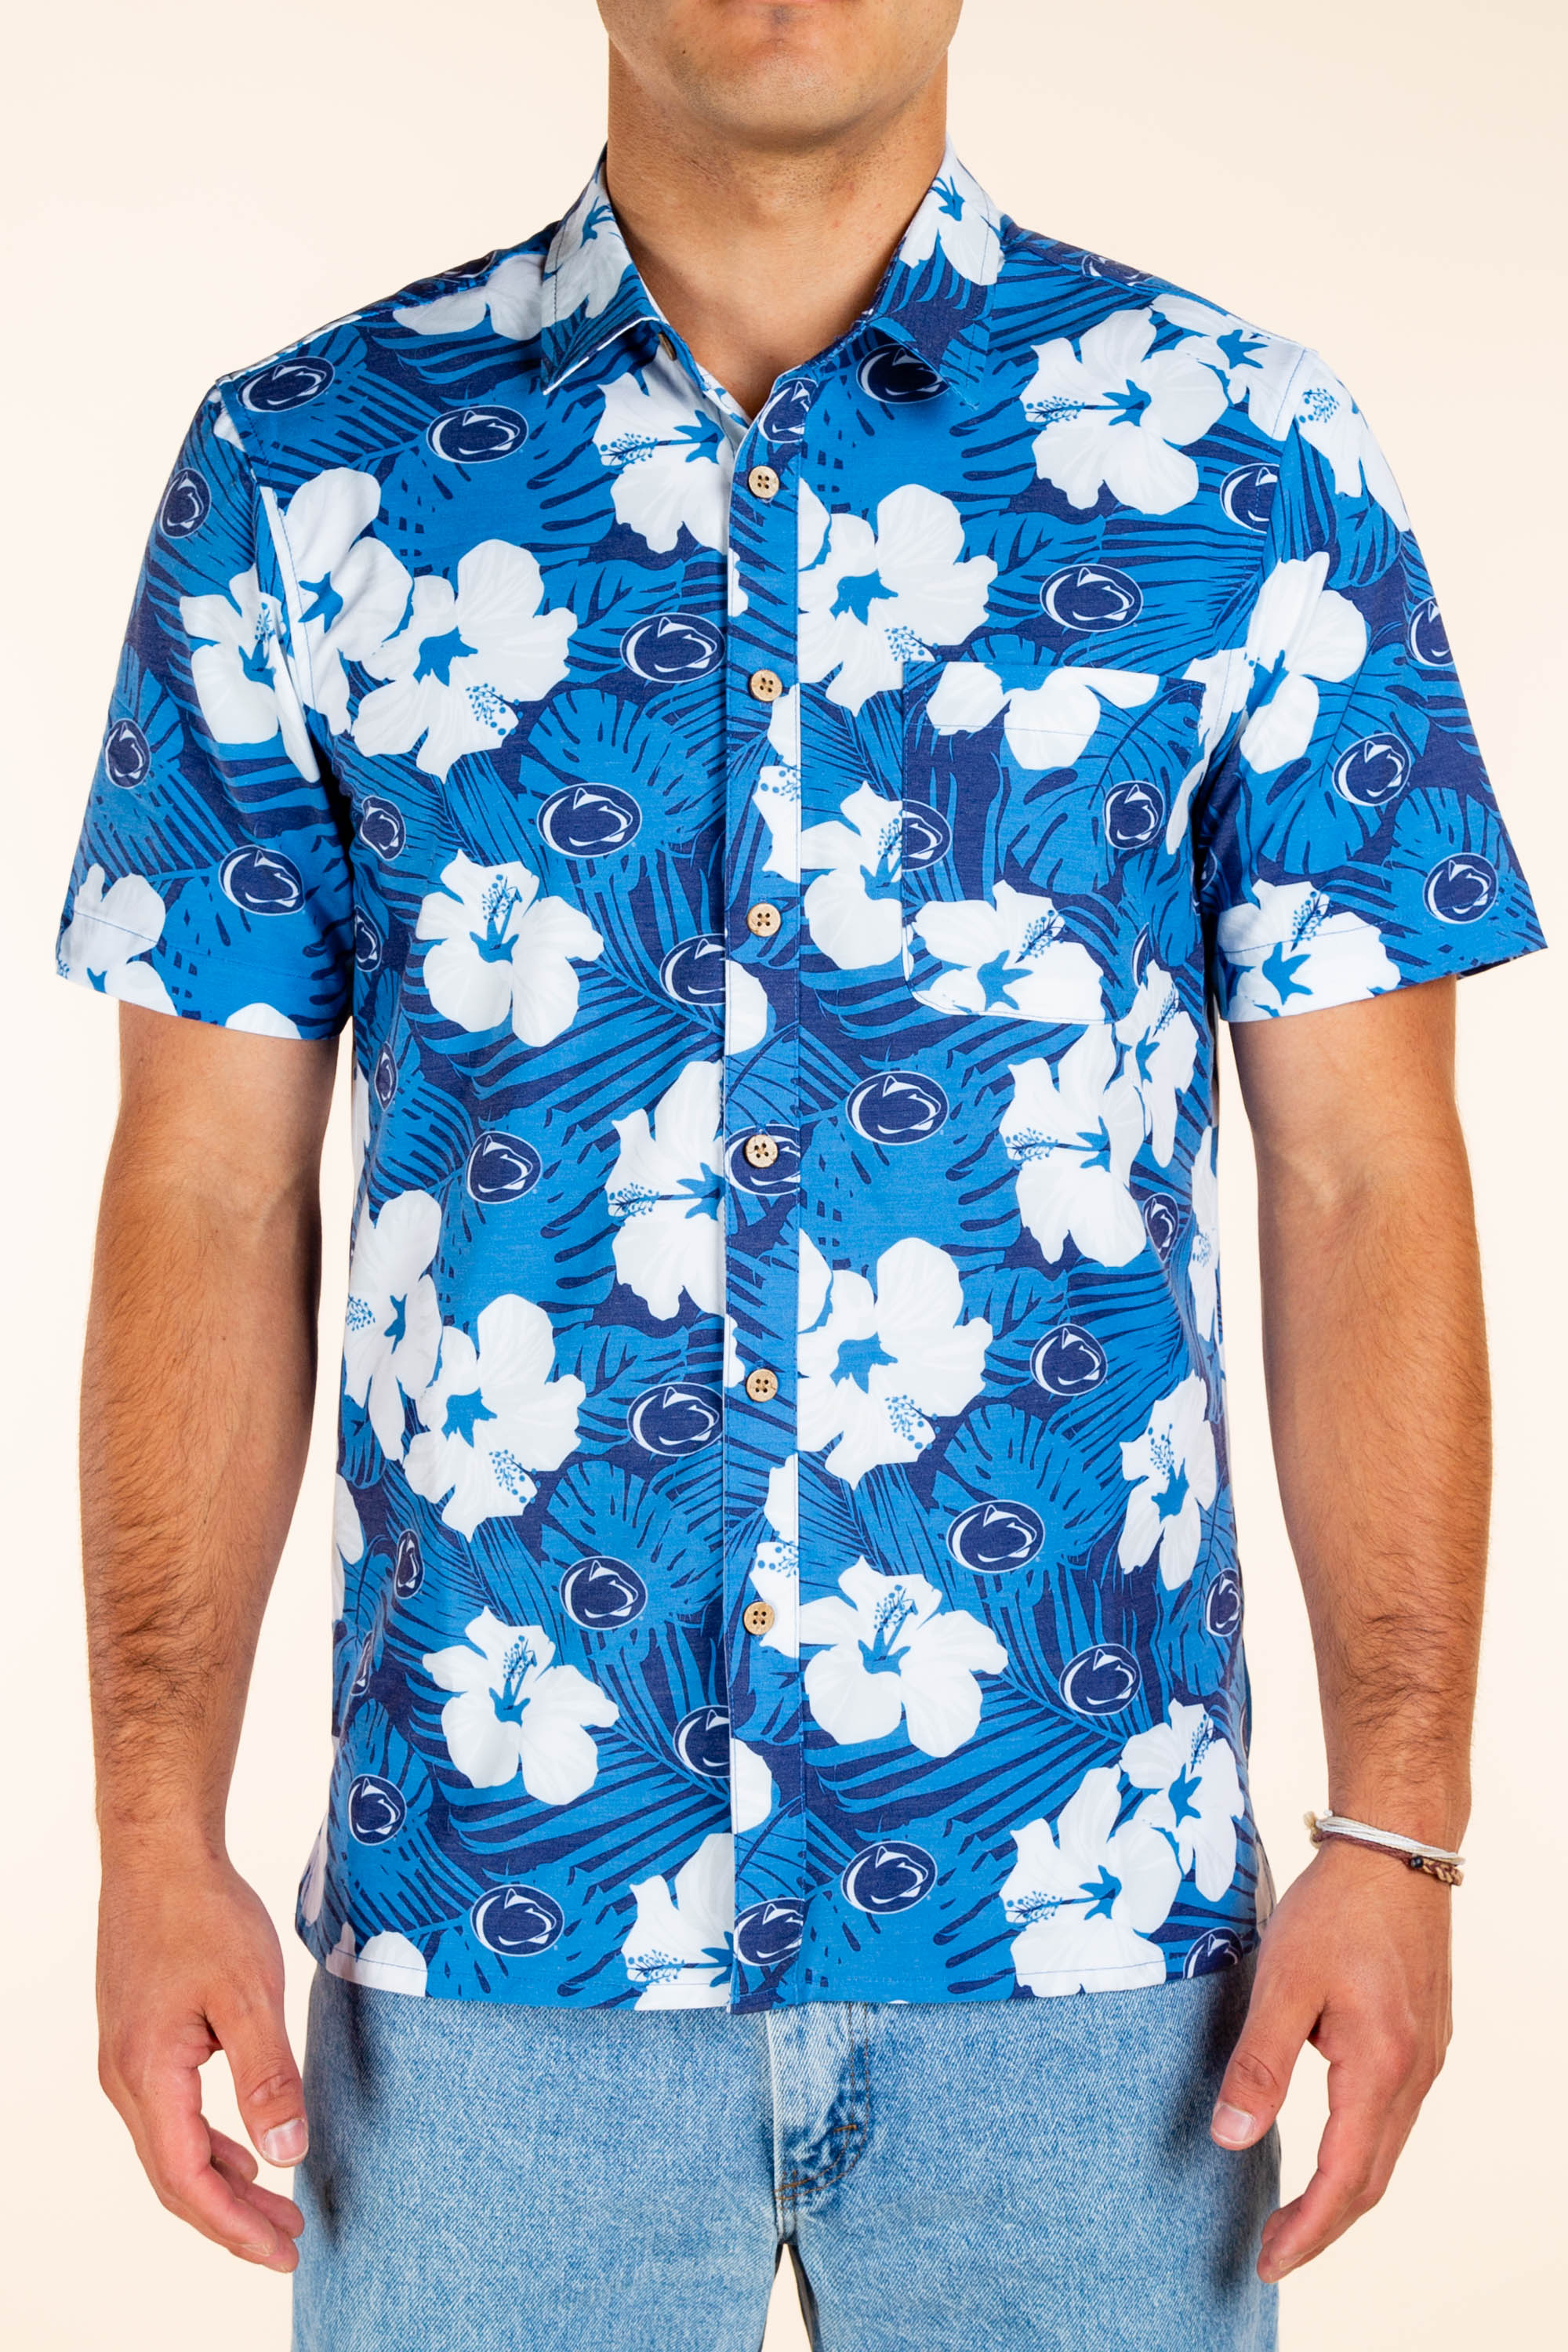 Penn State Hawaiian Shirt | The Nittany – tellumandchop